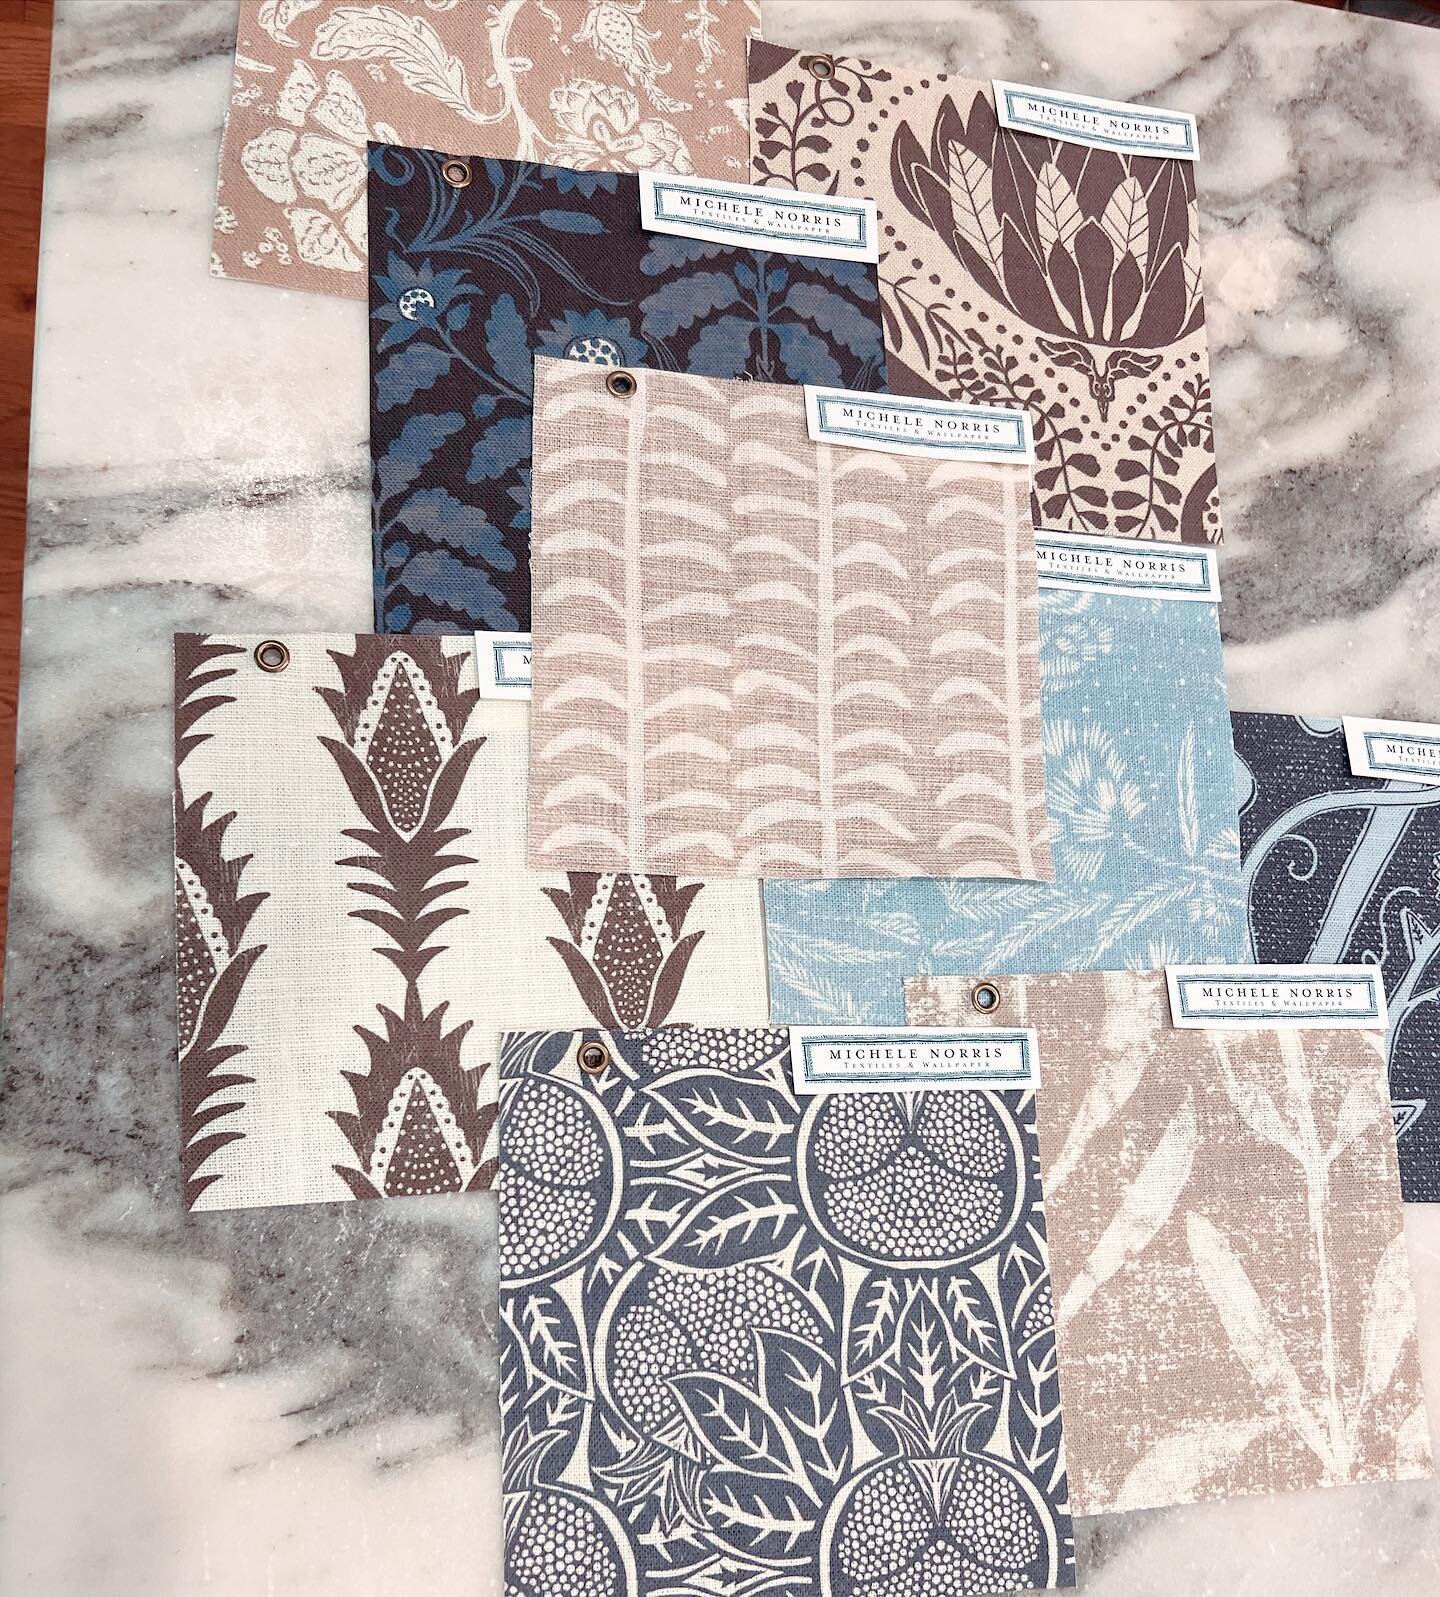 All the blues and browns! Belgian Linen of course! My favorite fabric for home d&eacute;cor applications 
.
.
.
#blueandbrown #homedecor #belgianlinen #spoonflower #patternobserver #textiledesign #homedecorinspo #customfabric #patternlover #interiors